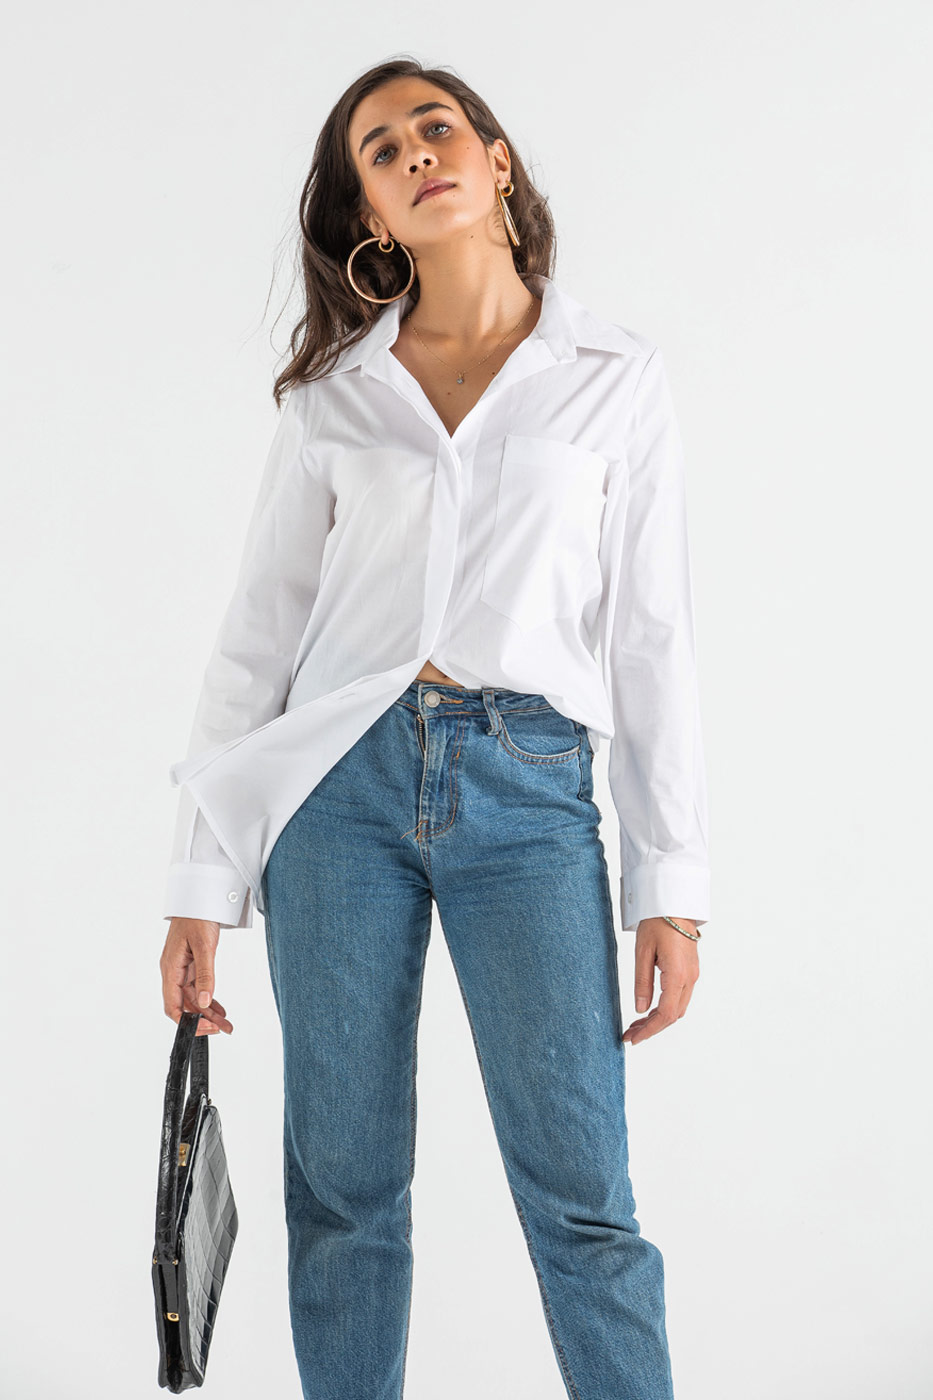 Your Basic White Shirt | Dresscode, Egypt